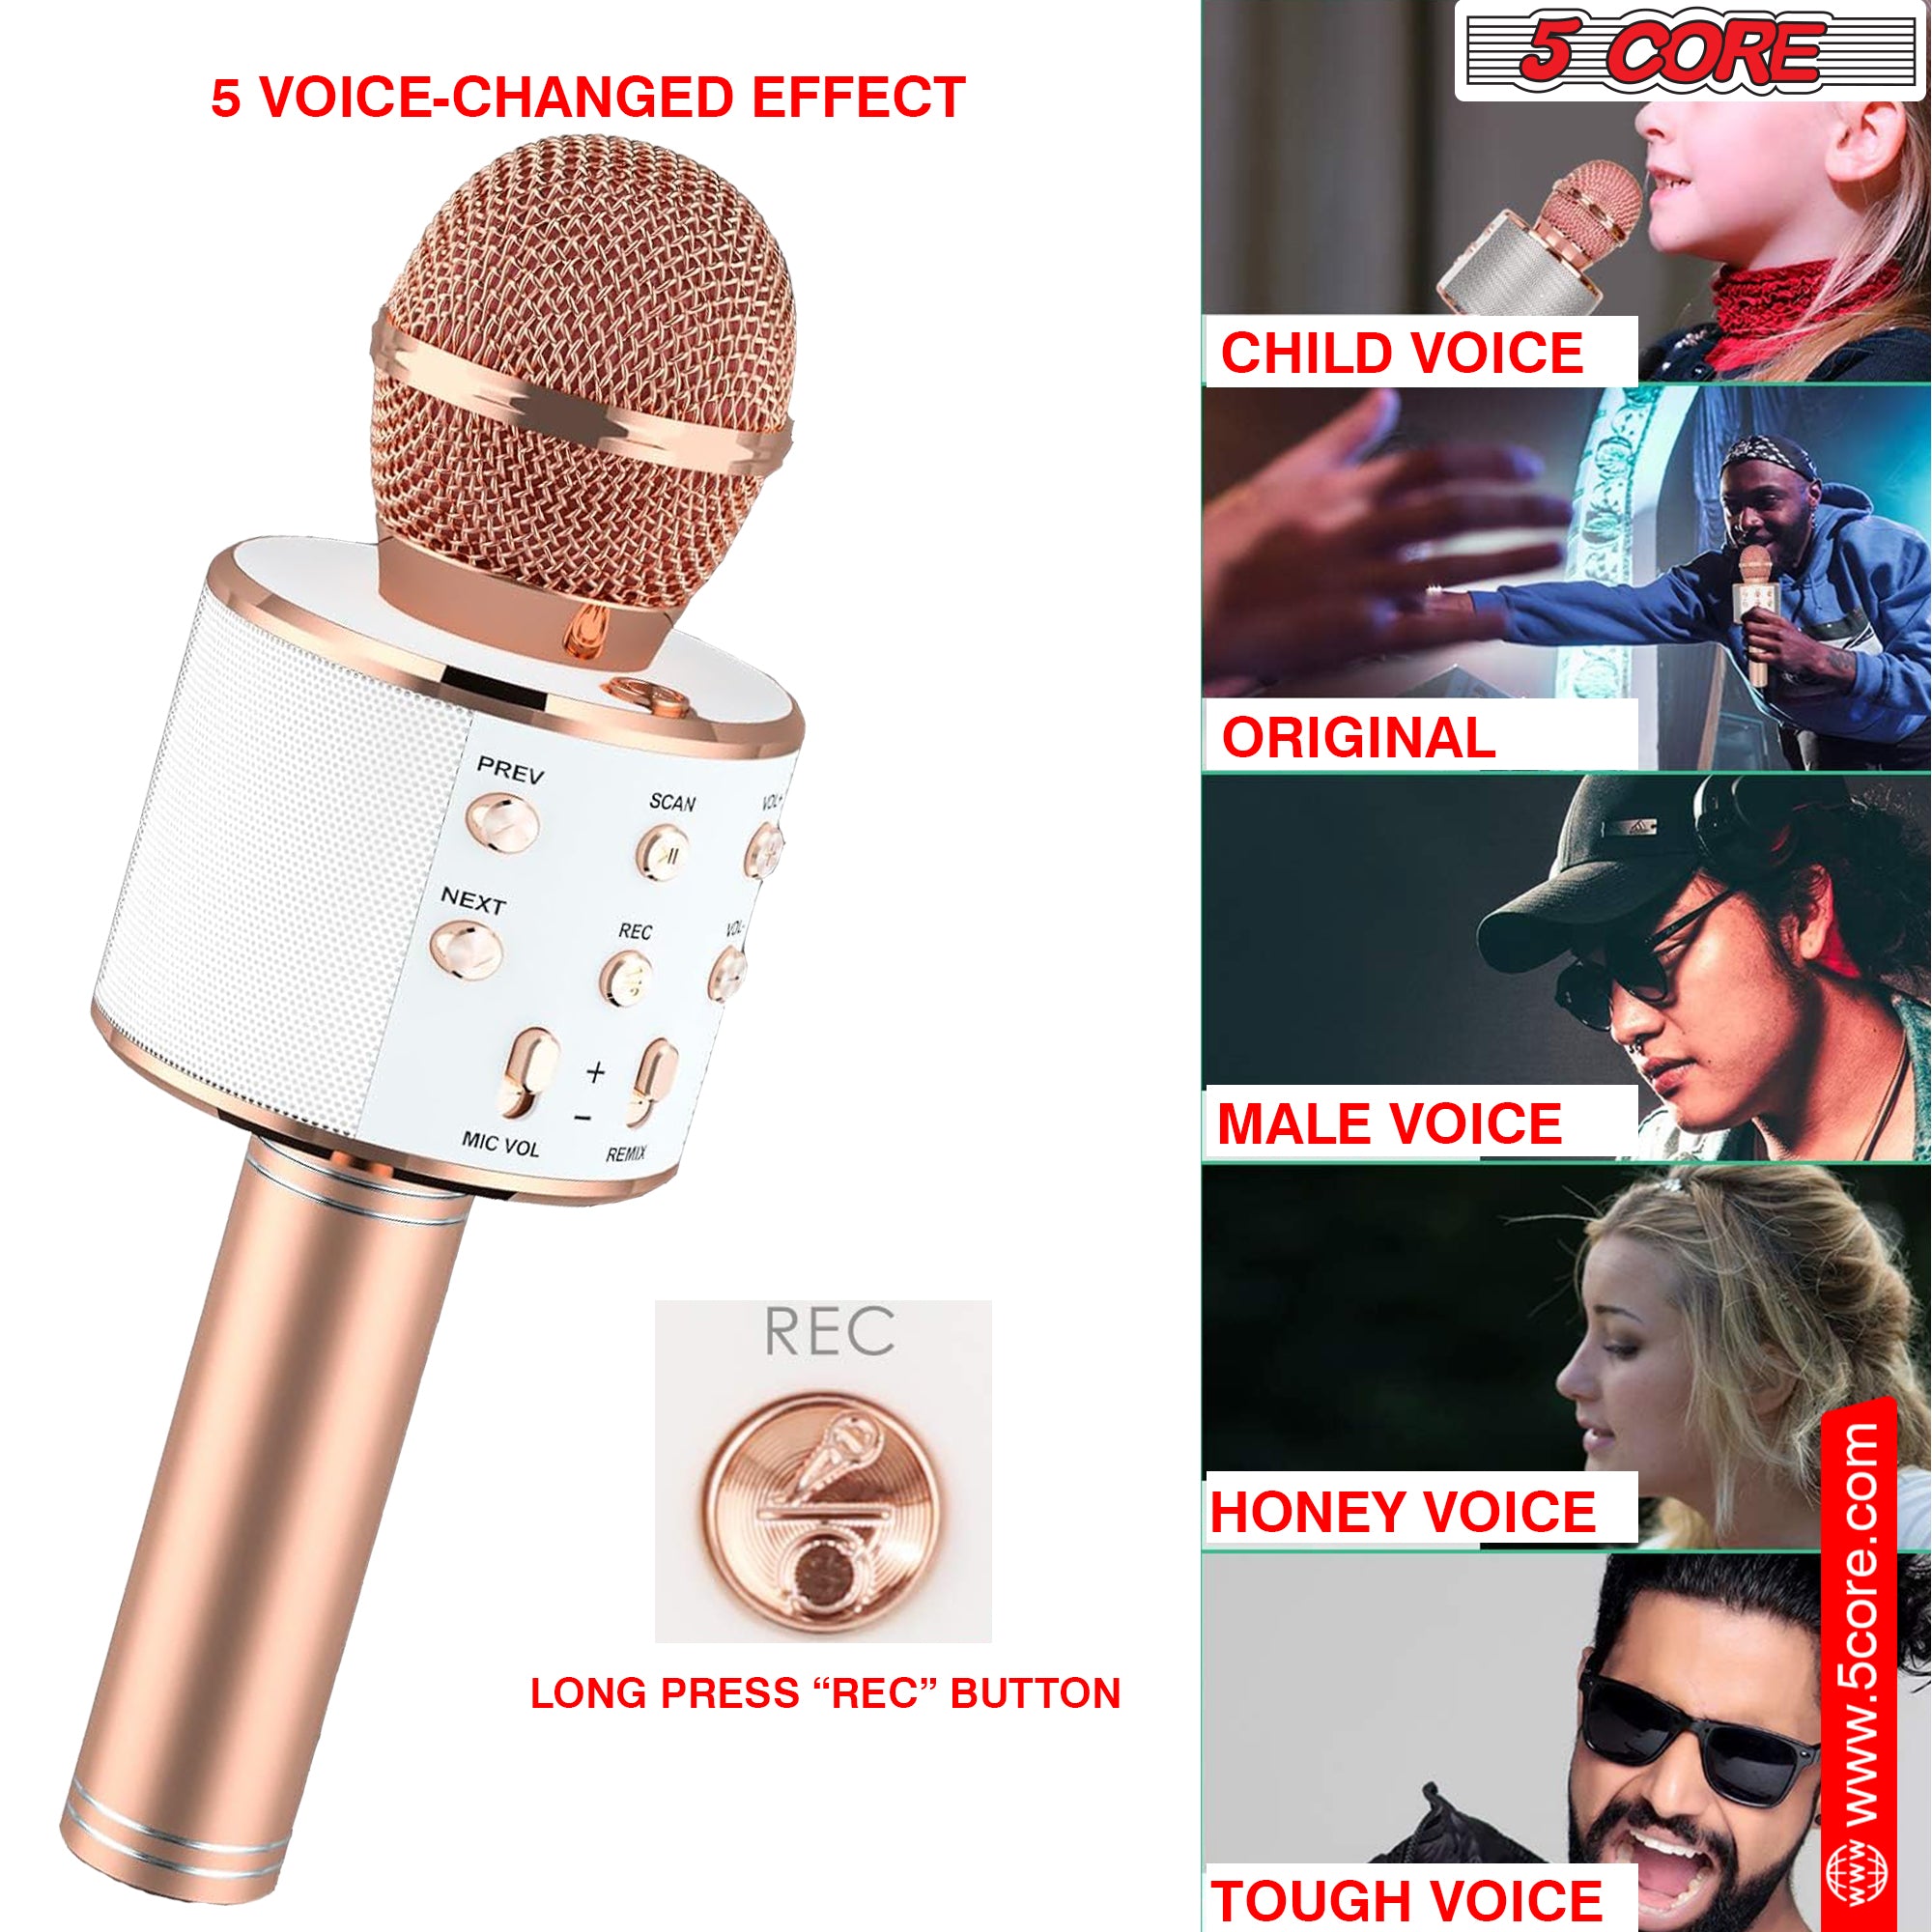 5 Core Bluetooth Wireless Karaoke Microphone, All-in-One Premium Handheld Karaoke Mic Speaker Recorder Player w/ Adjustable Remix FM Radio Great Gifts for Girls Boys Adults All Age (Copper)- WM SPK COPPER